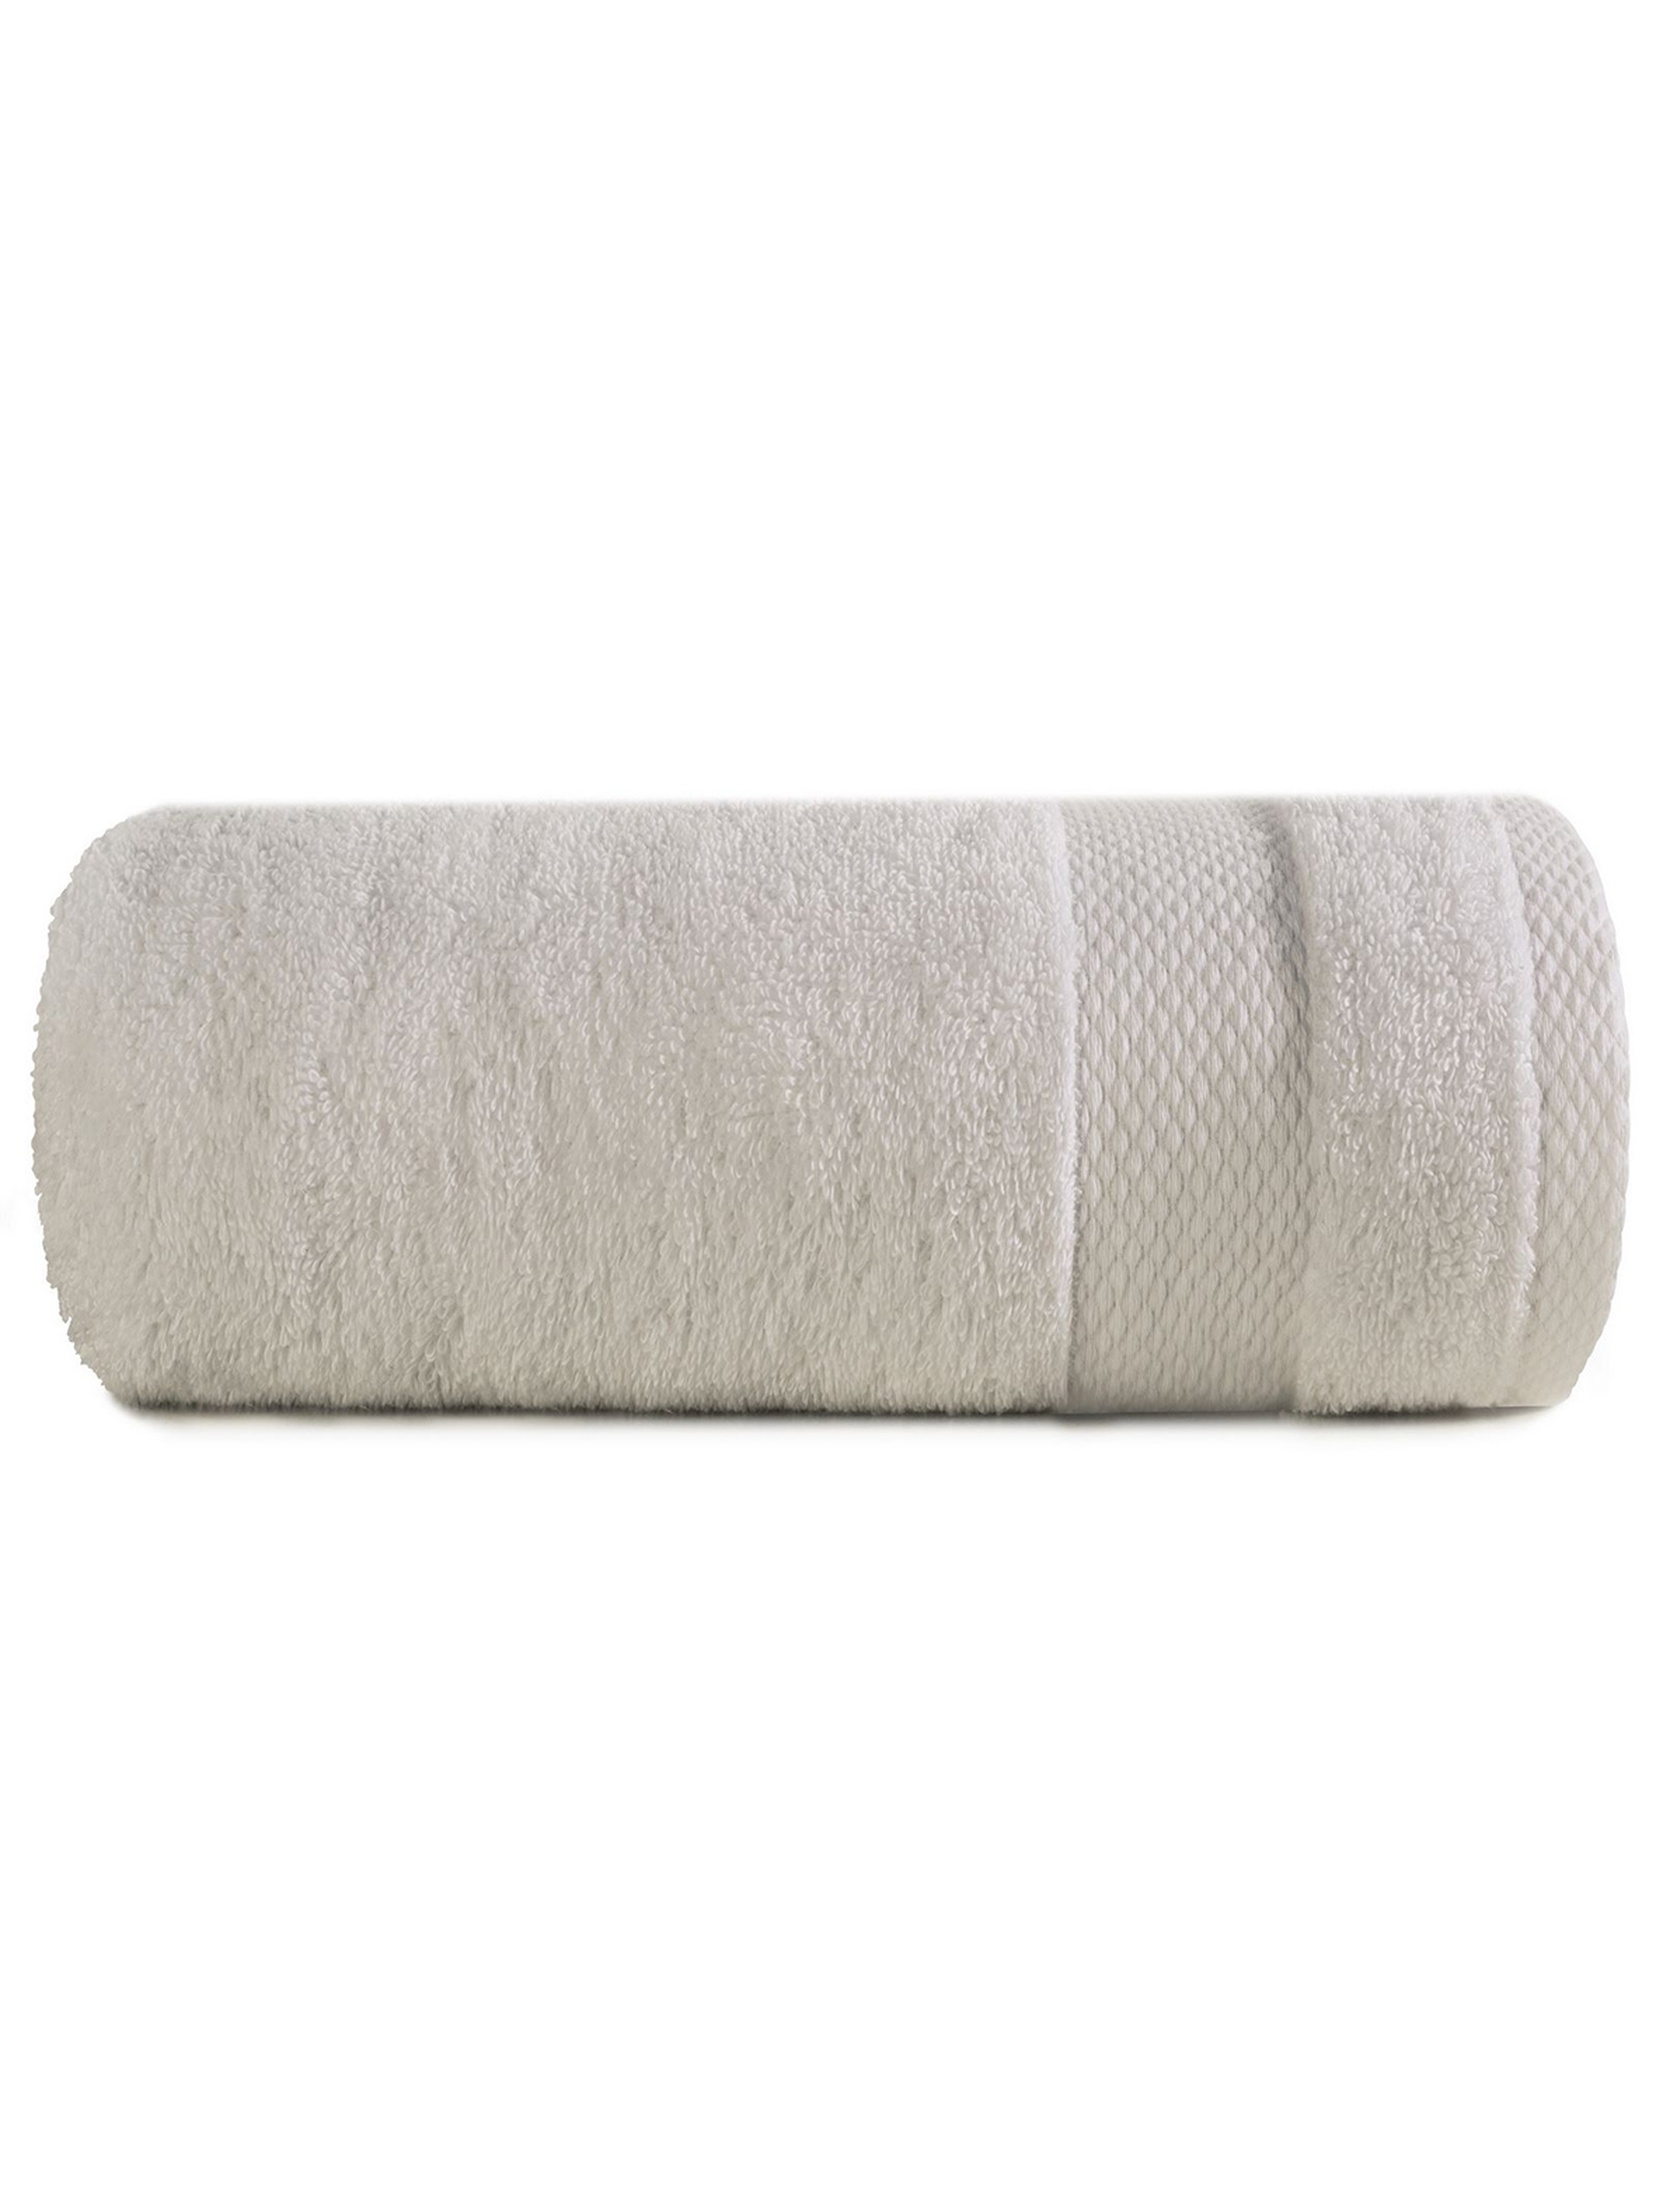 Ręcznik lorita (02) 70x140 cm beżowy